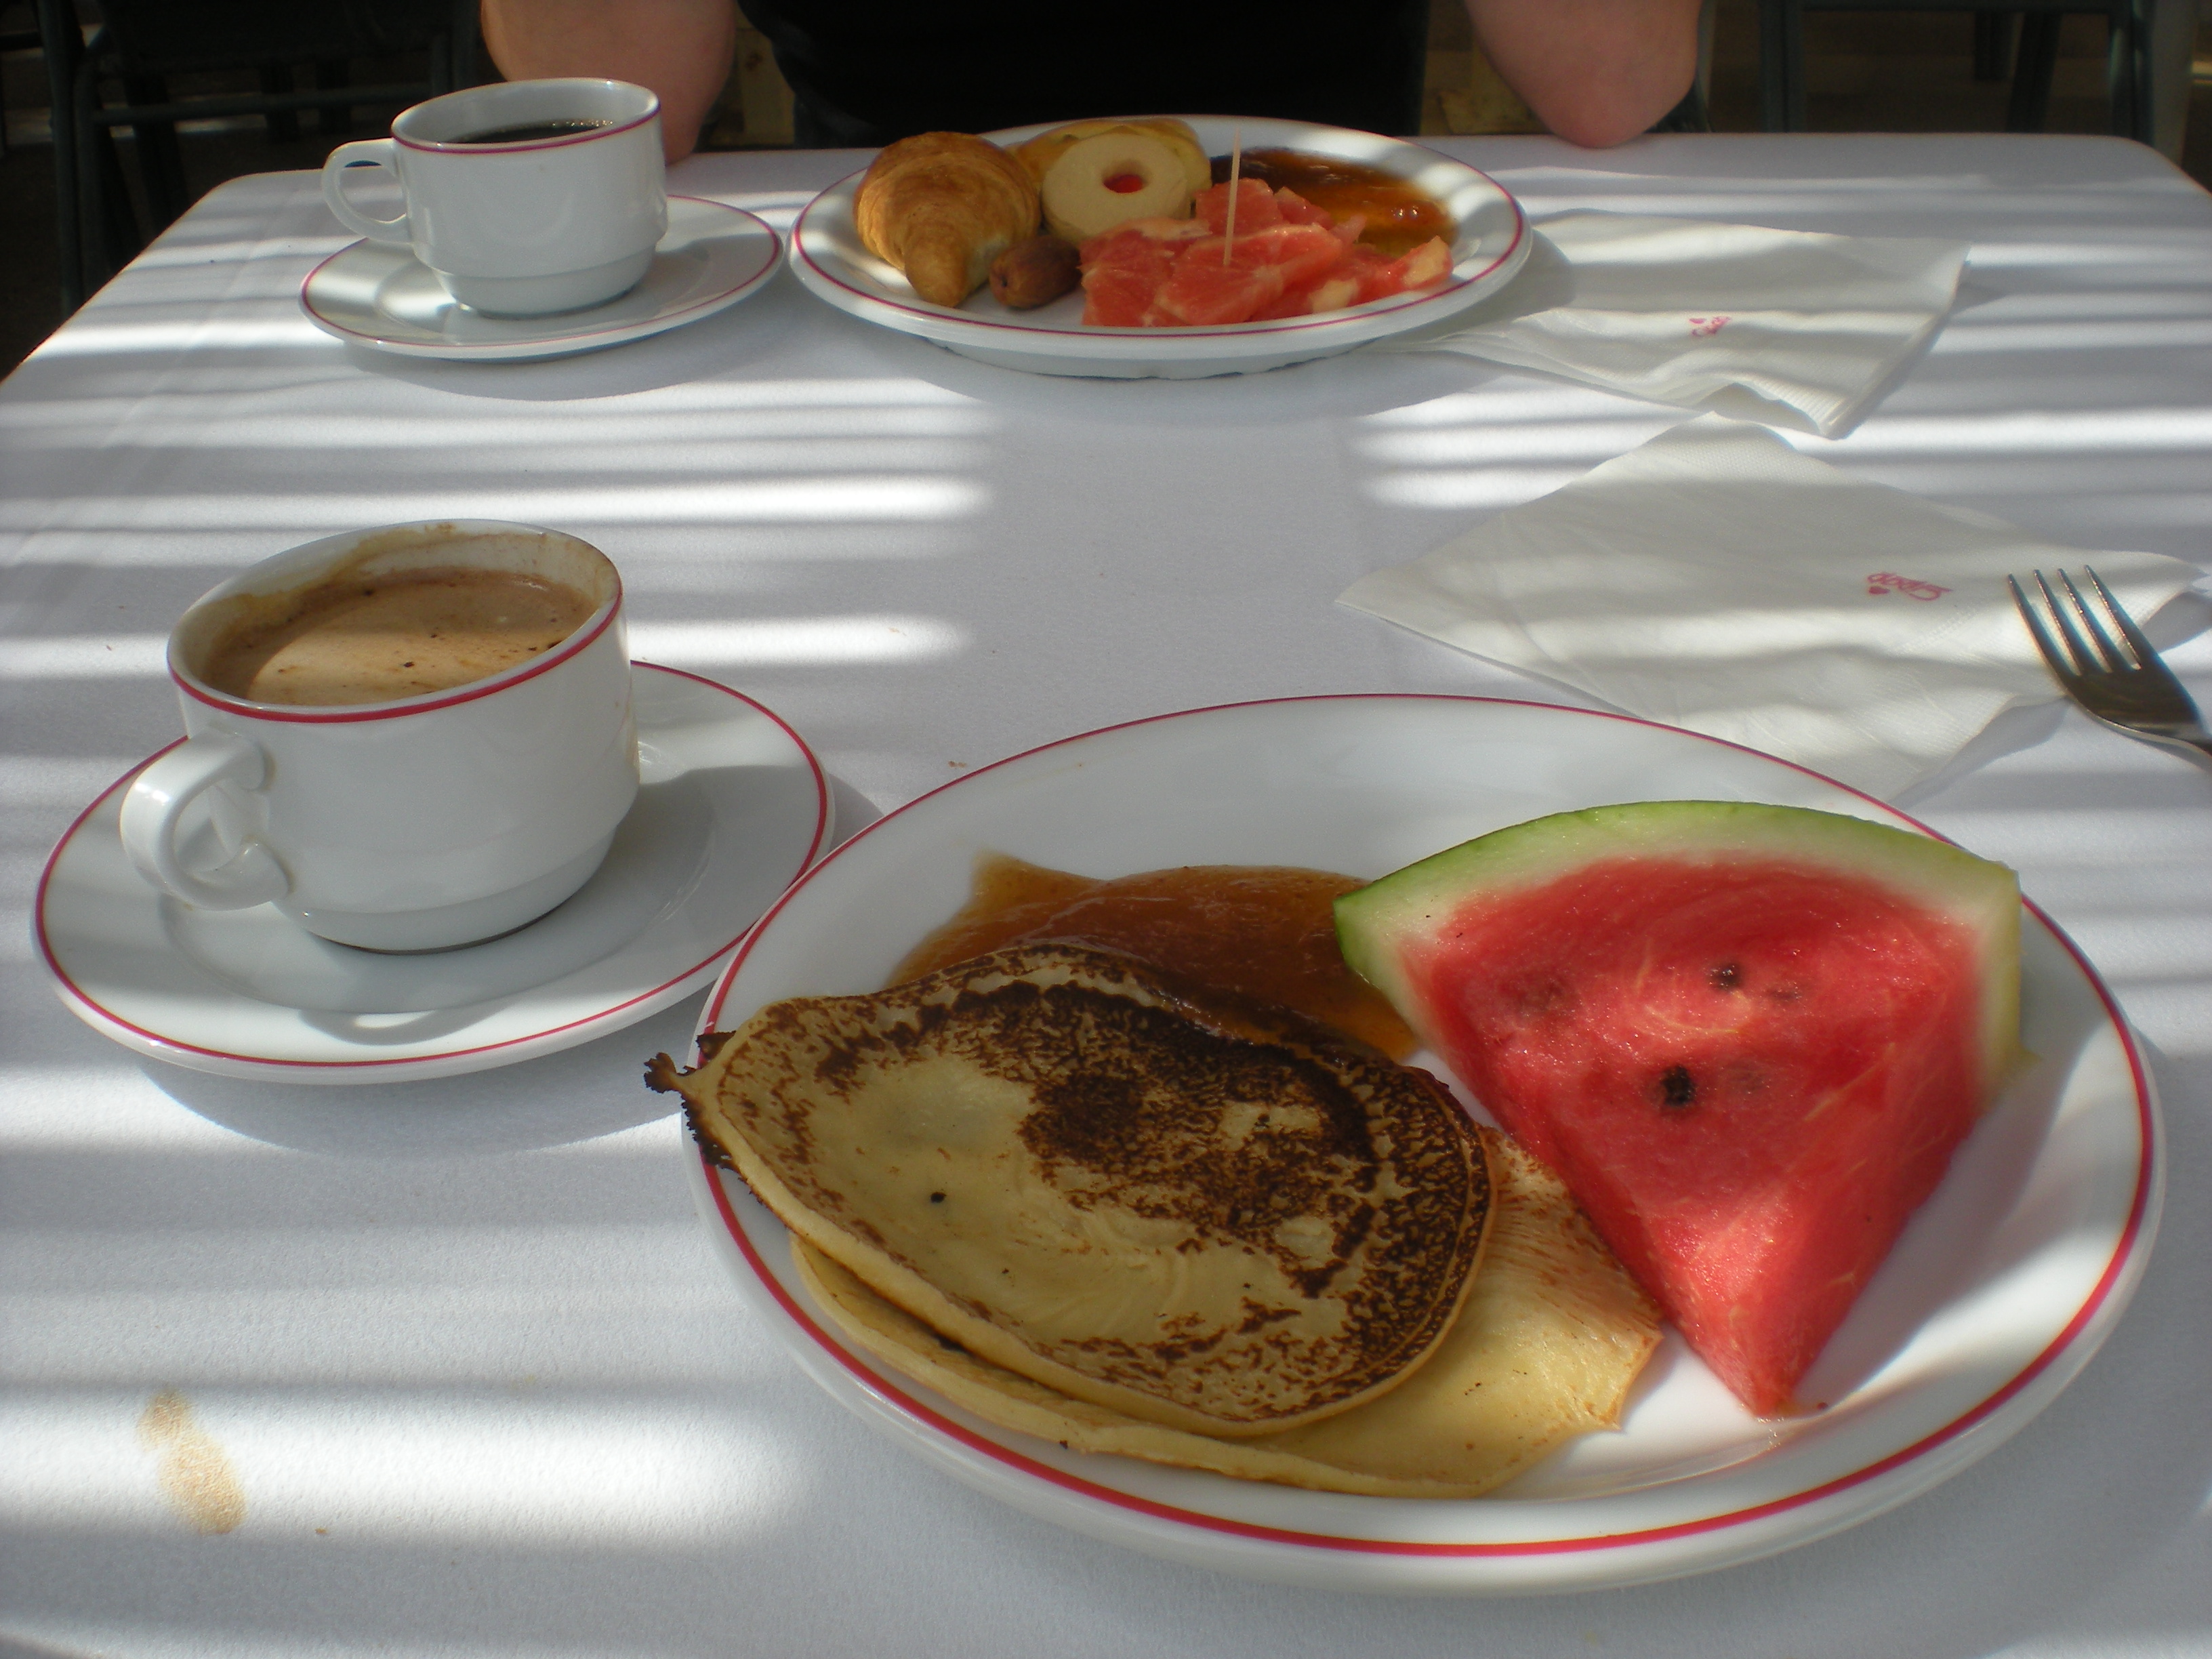 Breakfast in tunisia